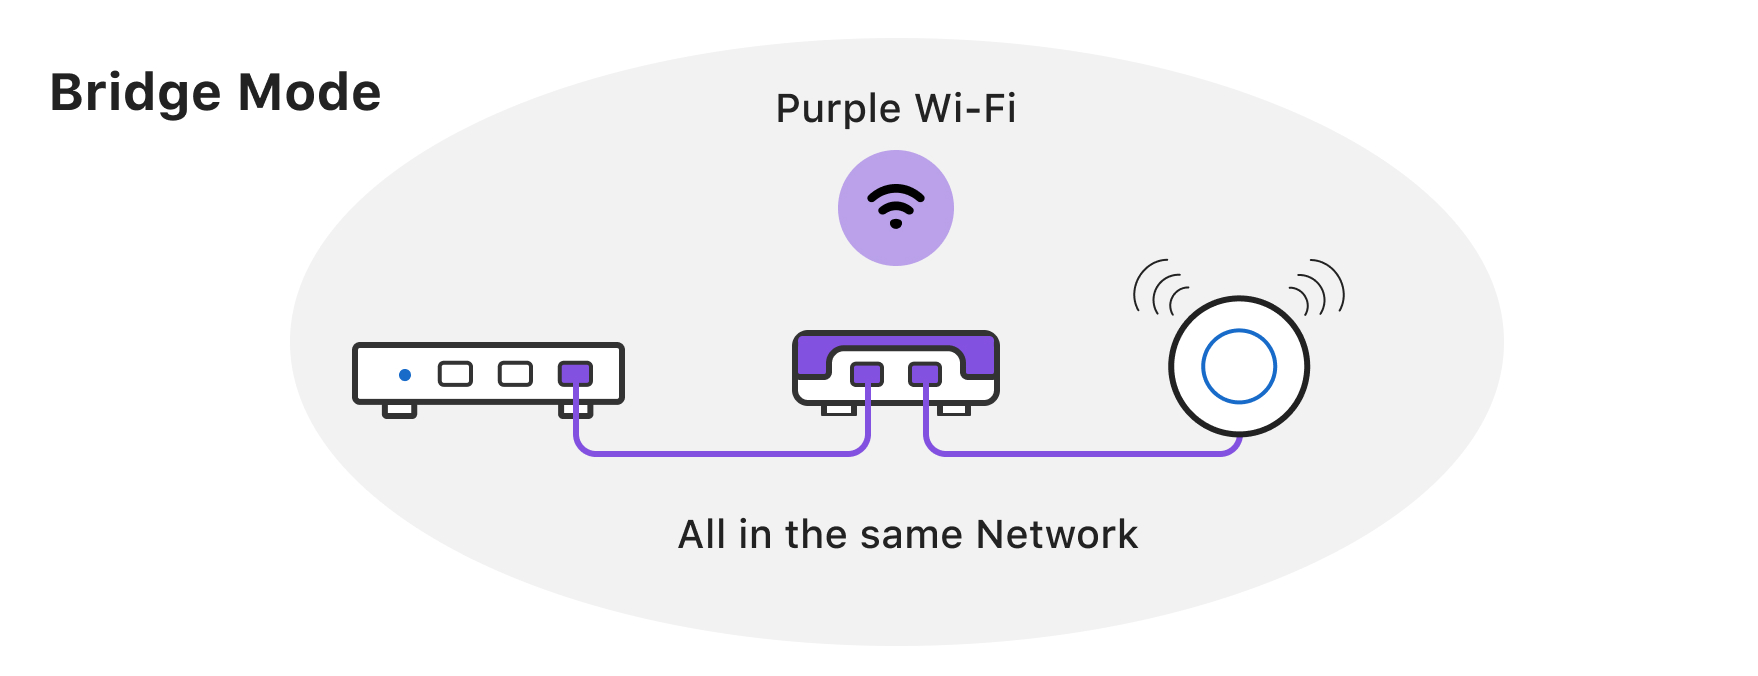 Firewalla Purple Wi-Fi access point used in Bridge Mode